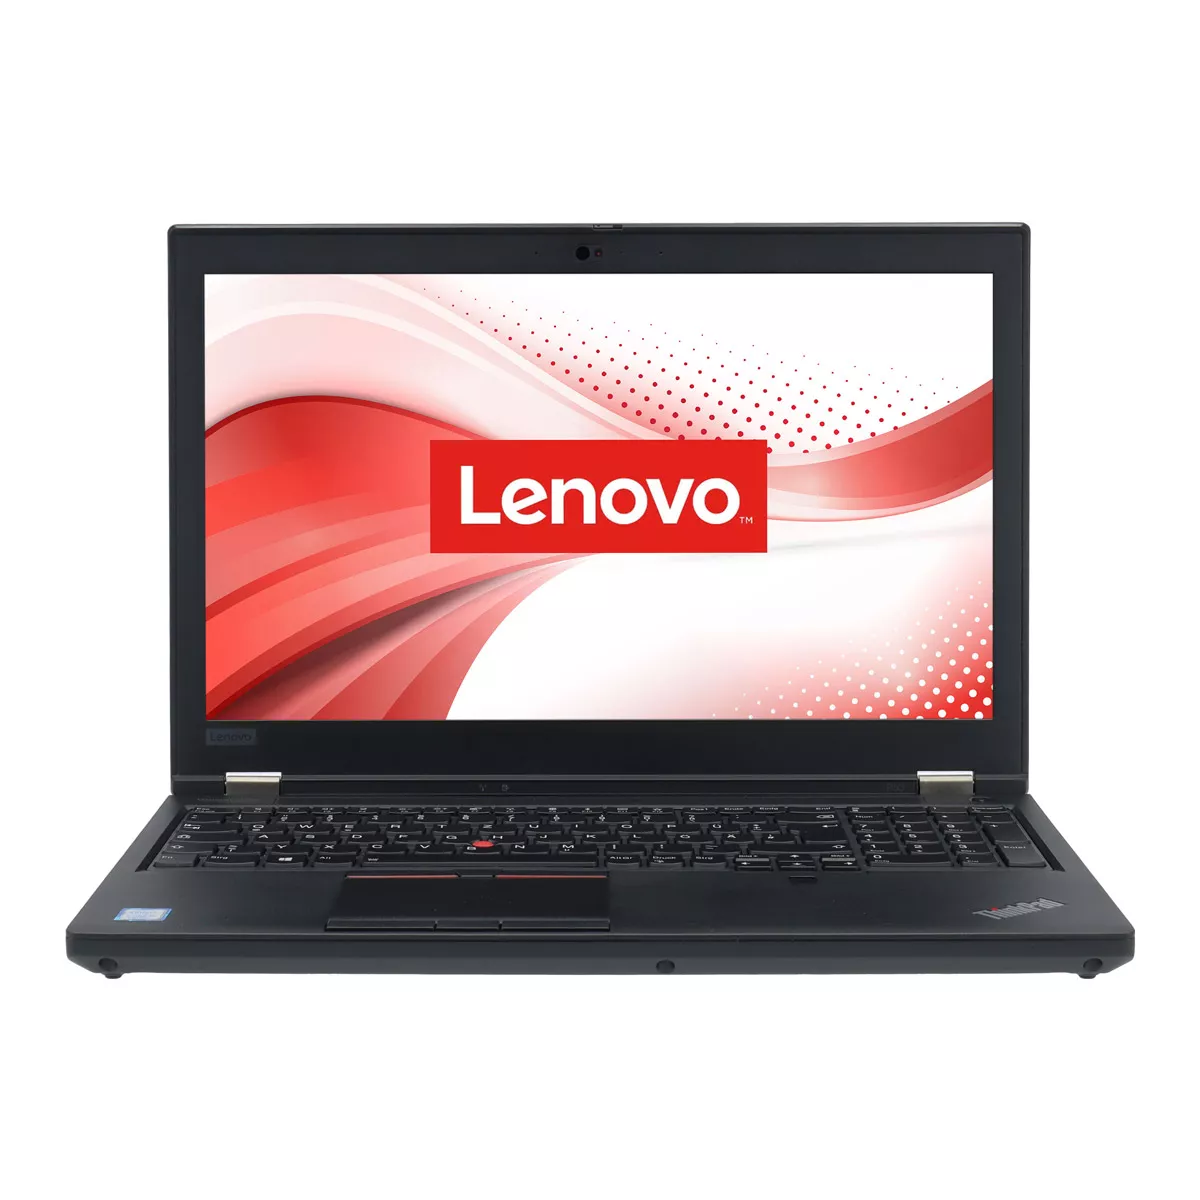 Lenovo ThinkPad P53 Core i7 9850H nVidia Quadro RTX 3000 32 GB 500 GB M.2 nVME SSD Webcam A